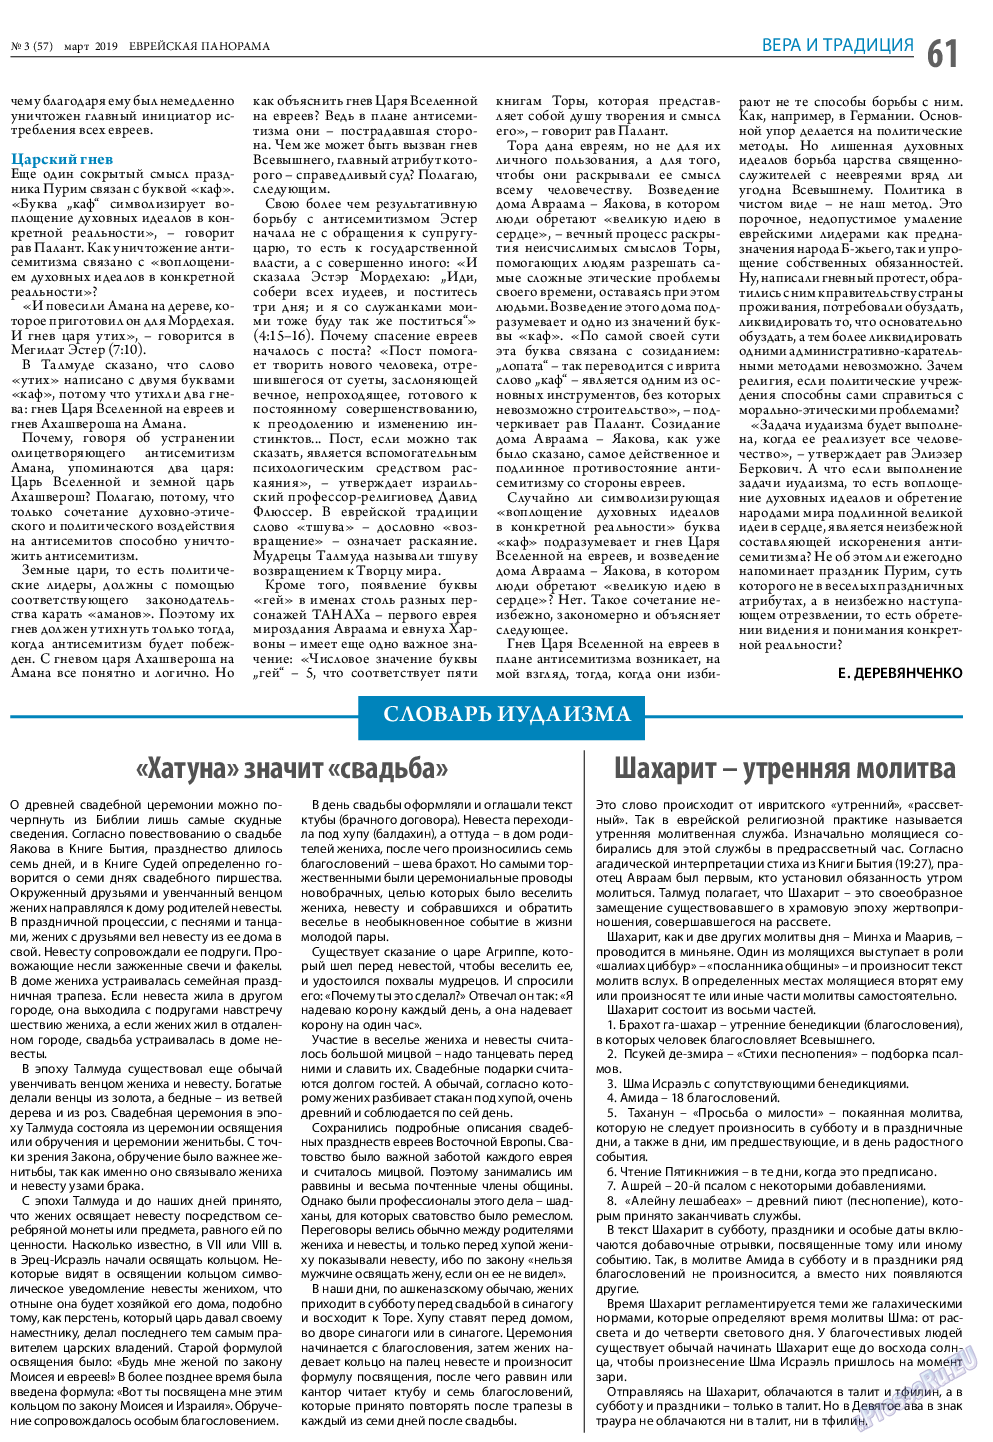 Еврейская панорама, газета. 2019 №3 стр.61